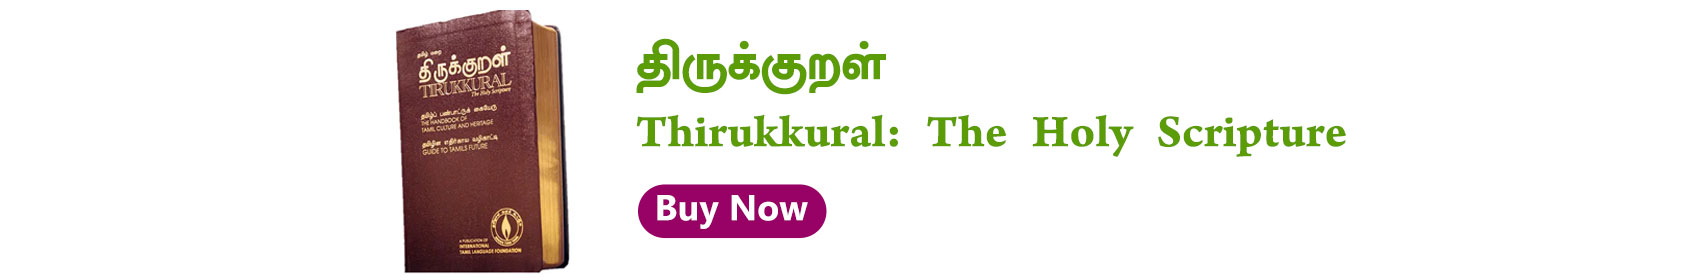 Thirukkural: The Holy Scripture